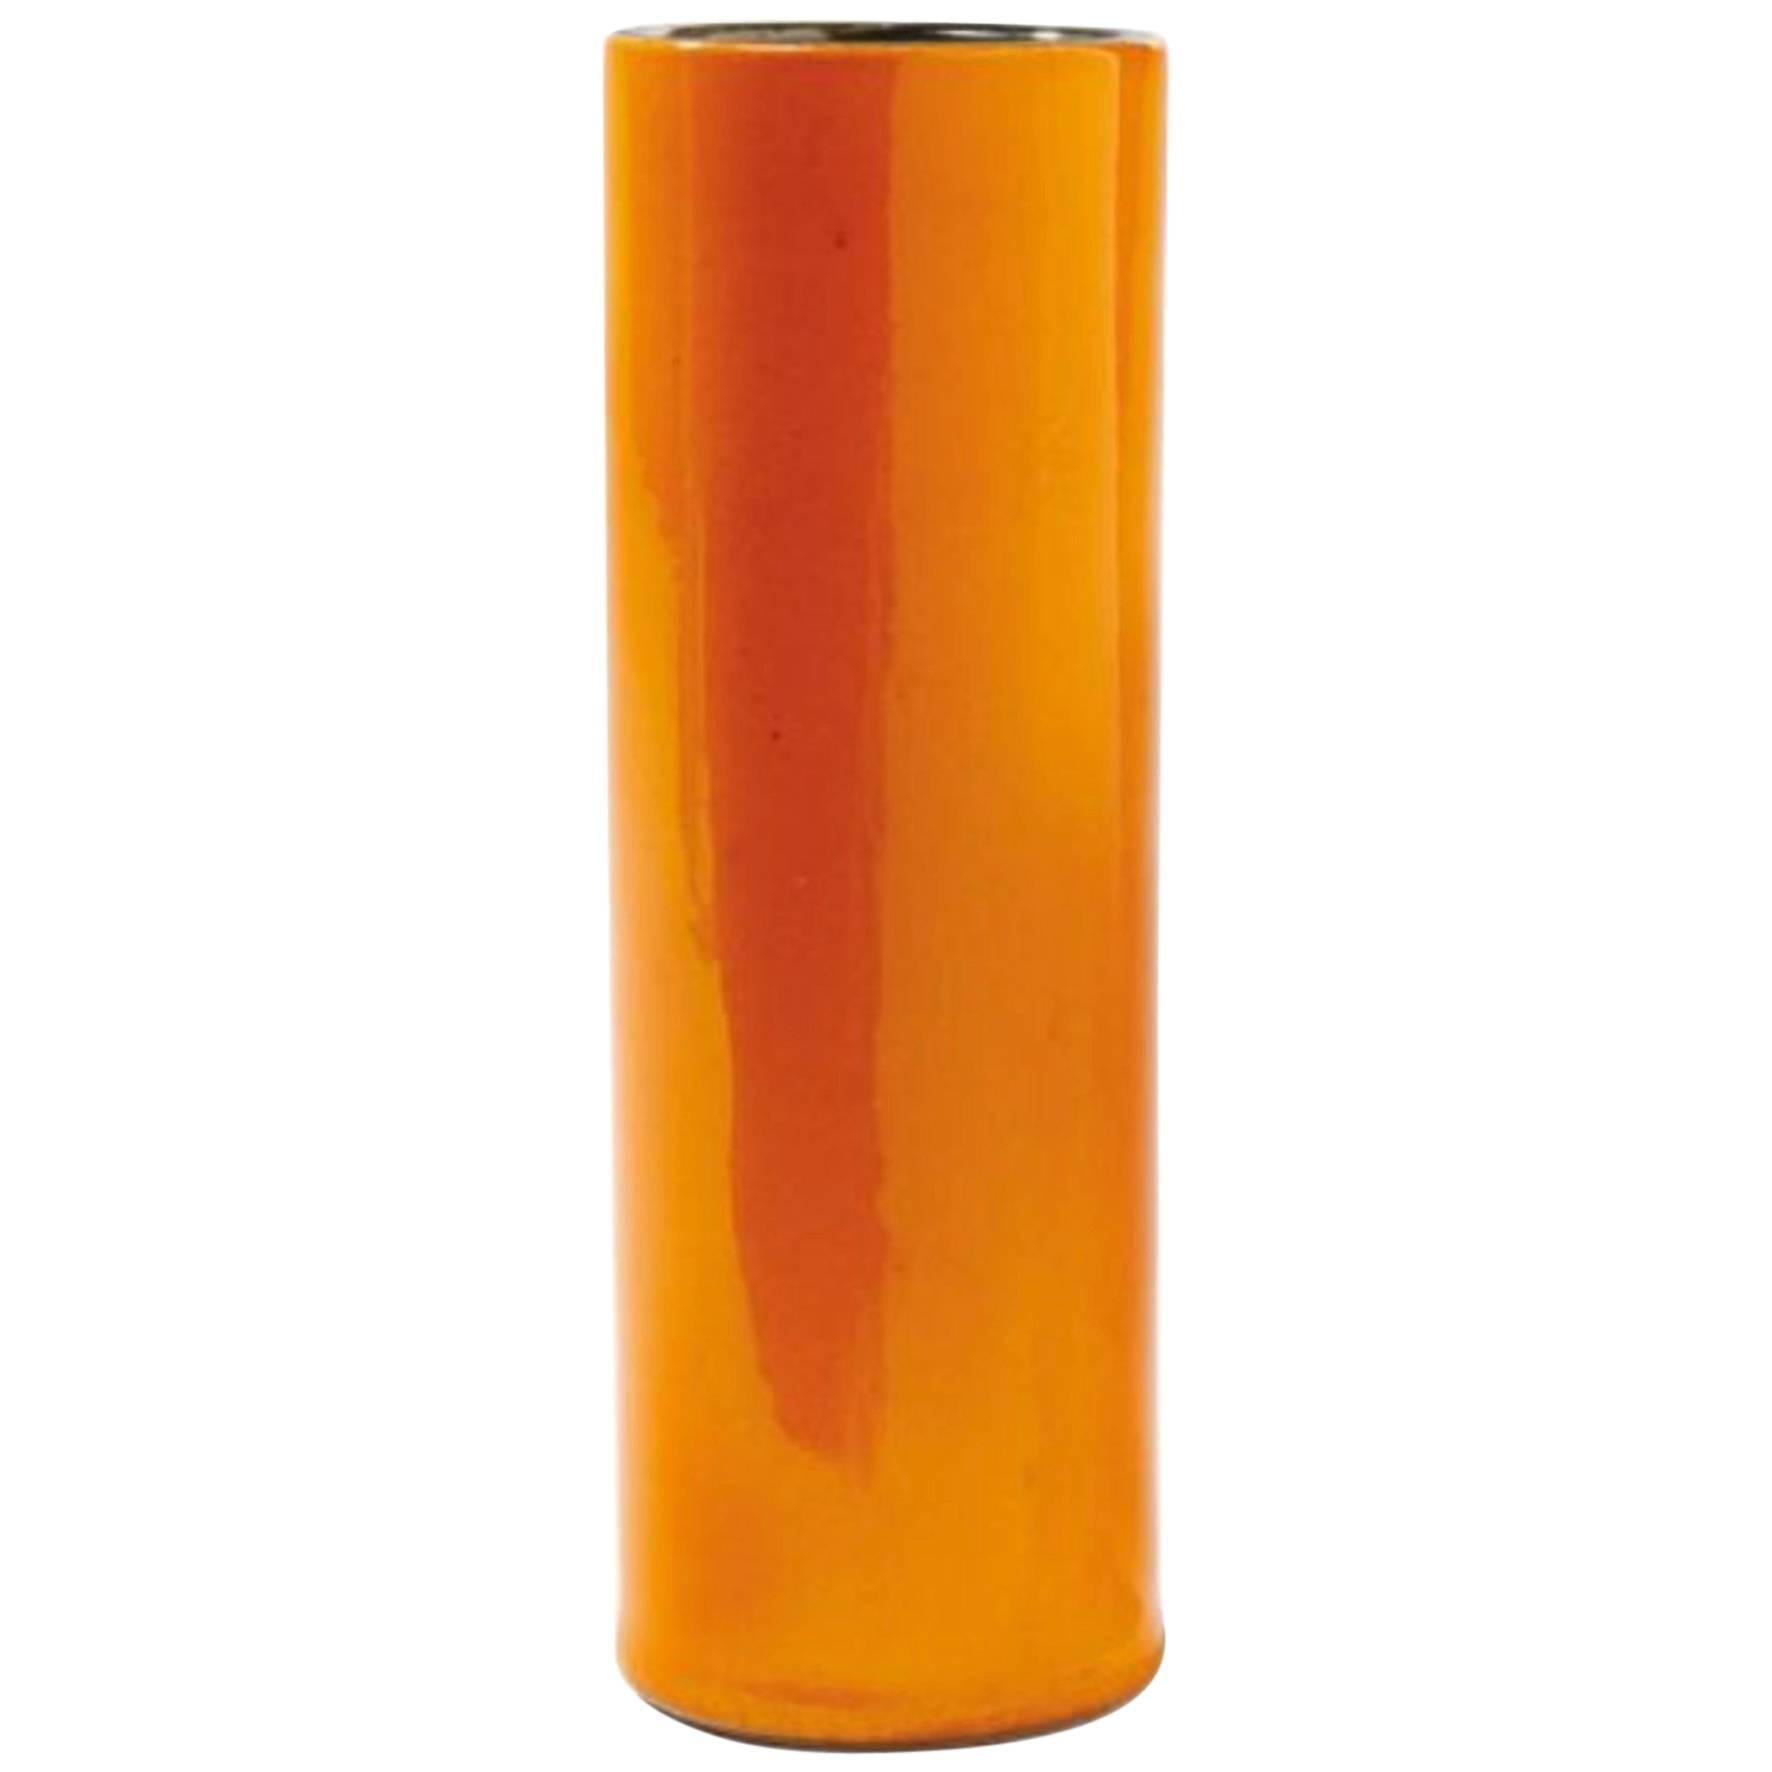 Georges Jouve, an Orange "Cylinder" Vase, circa 1960